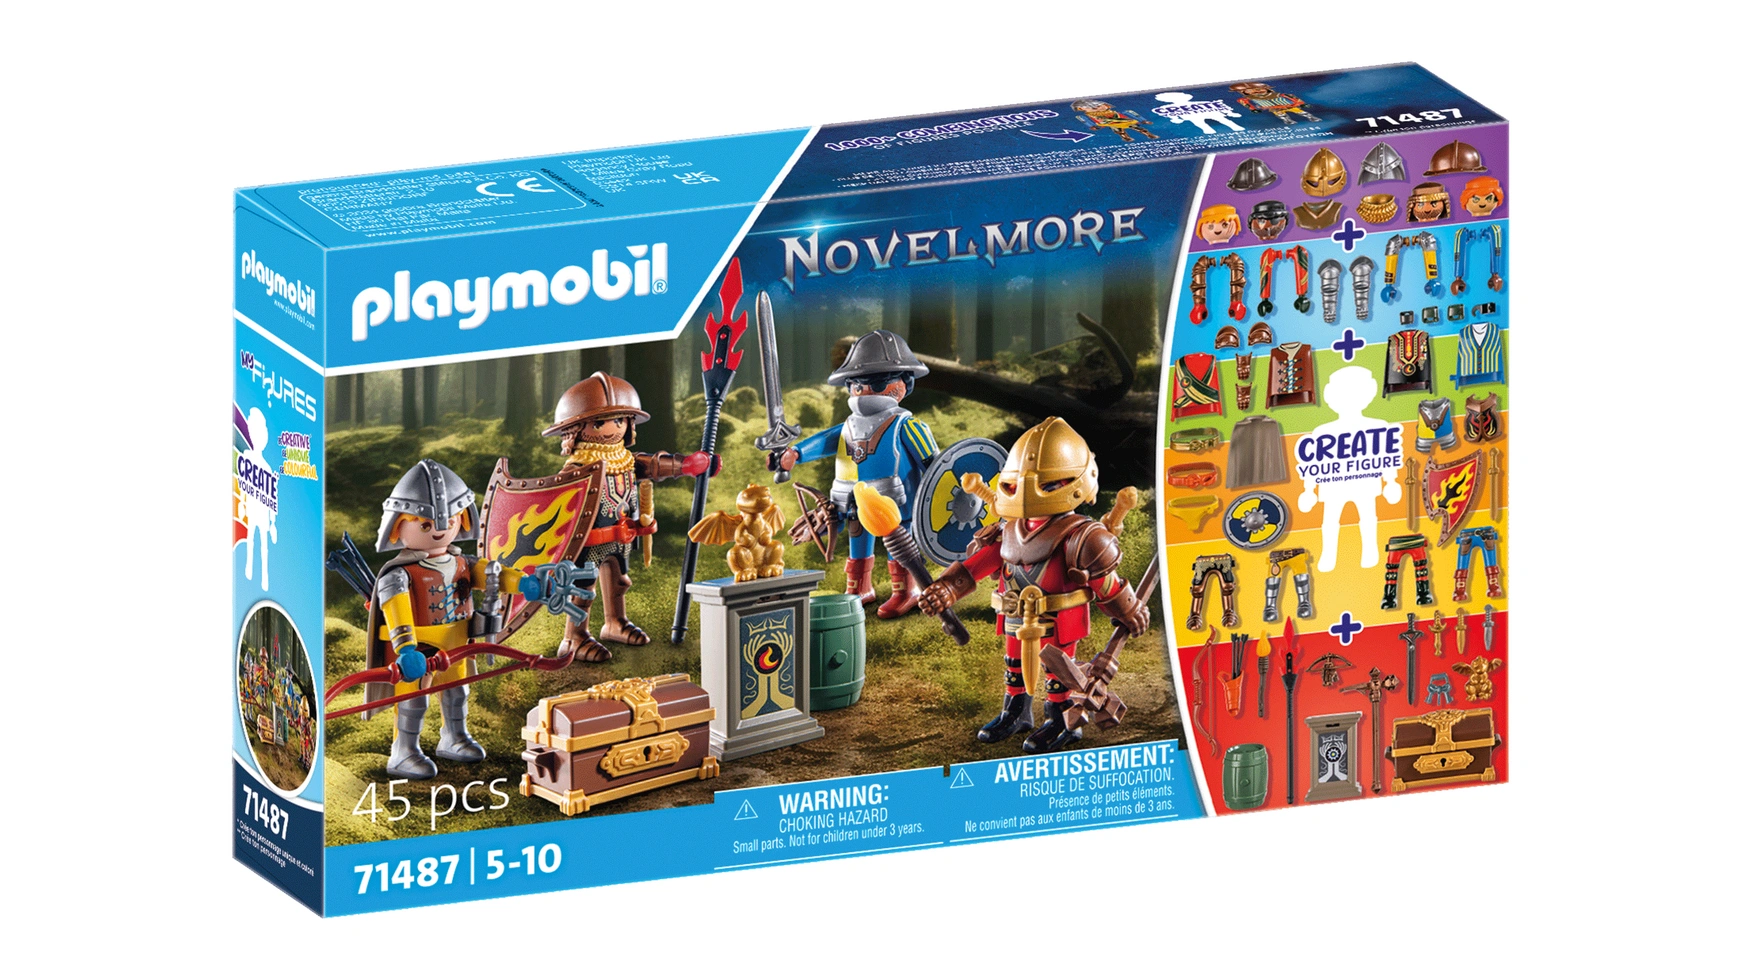 Novelmore мои фигурки: рыцари новелмора Playmobil конструктор playmobil отдельные фигурки 70248 агент с дроном